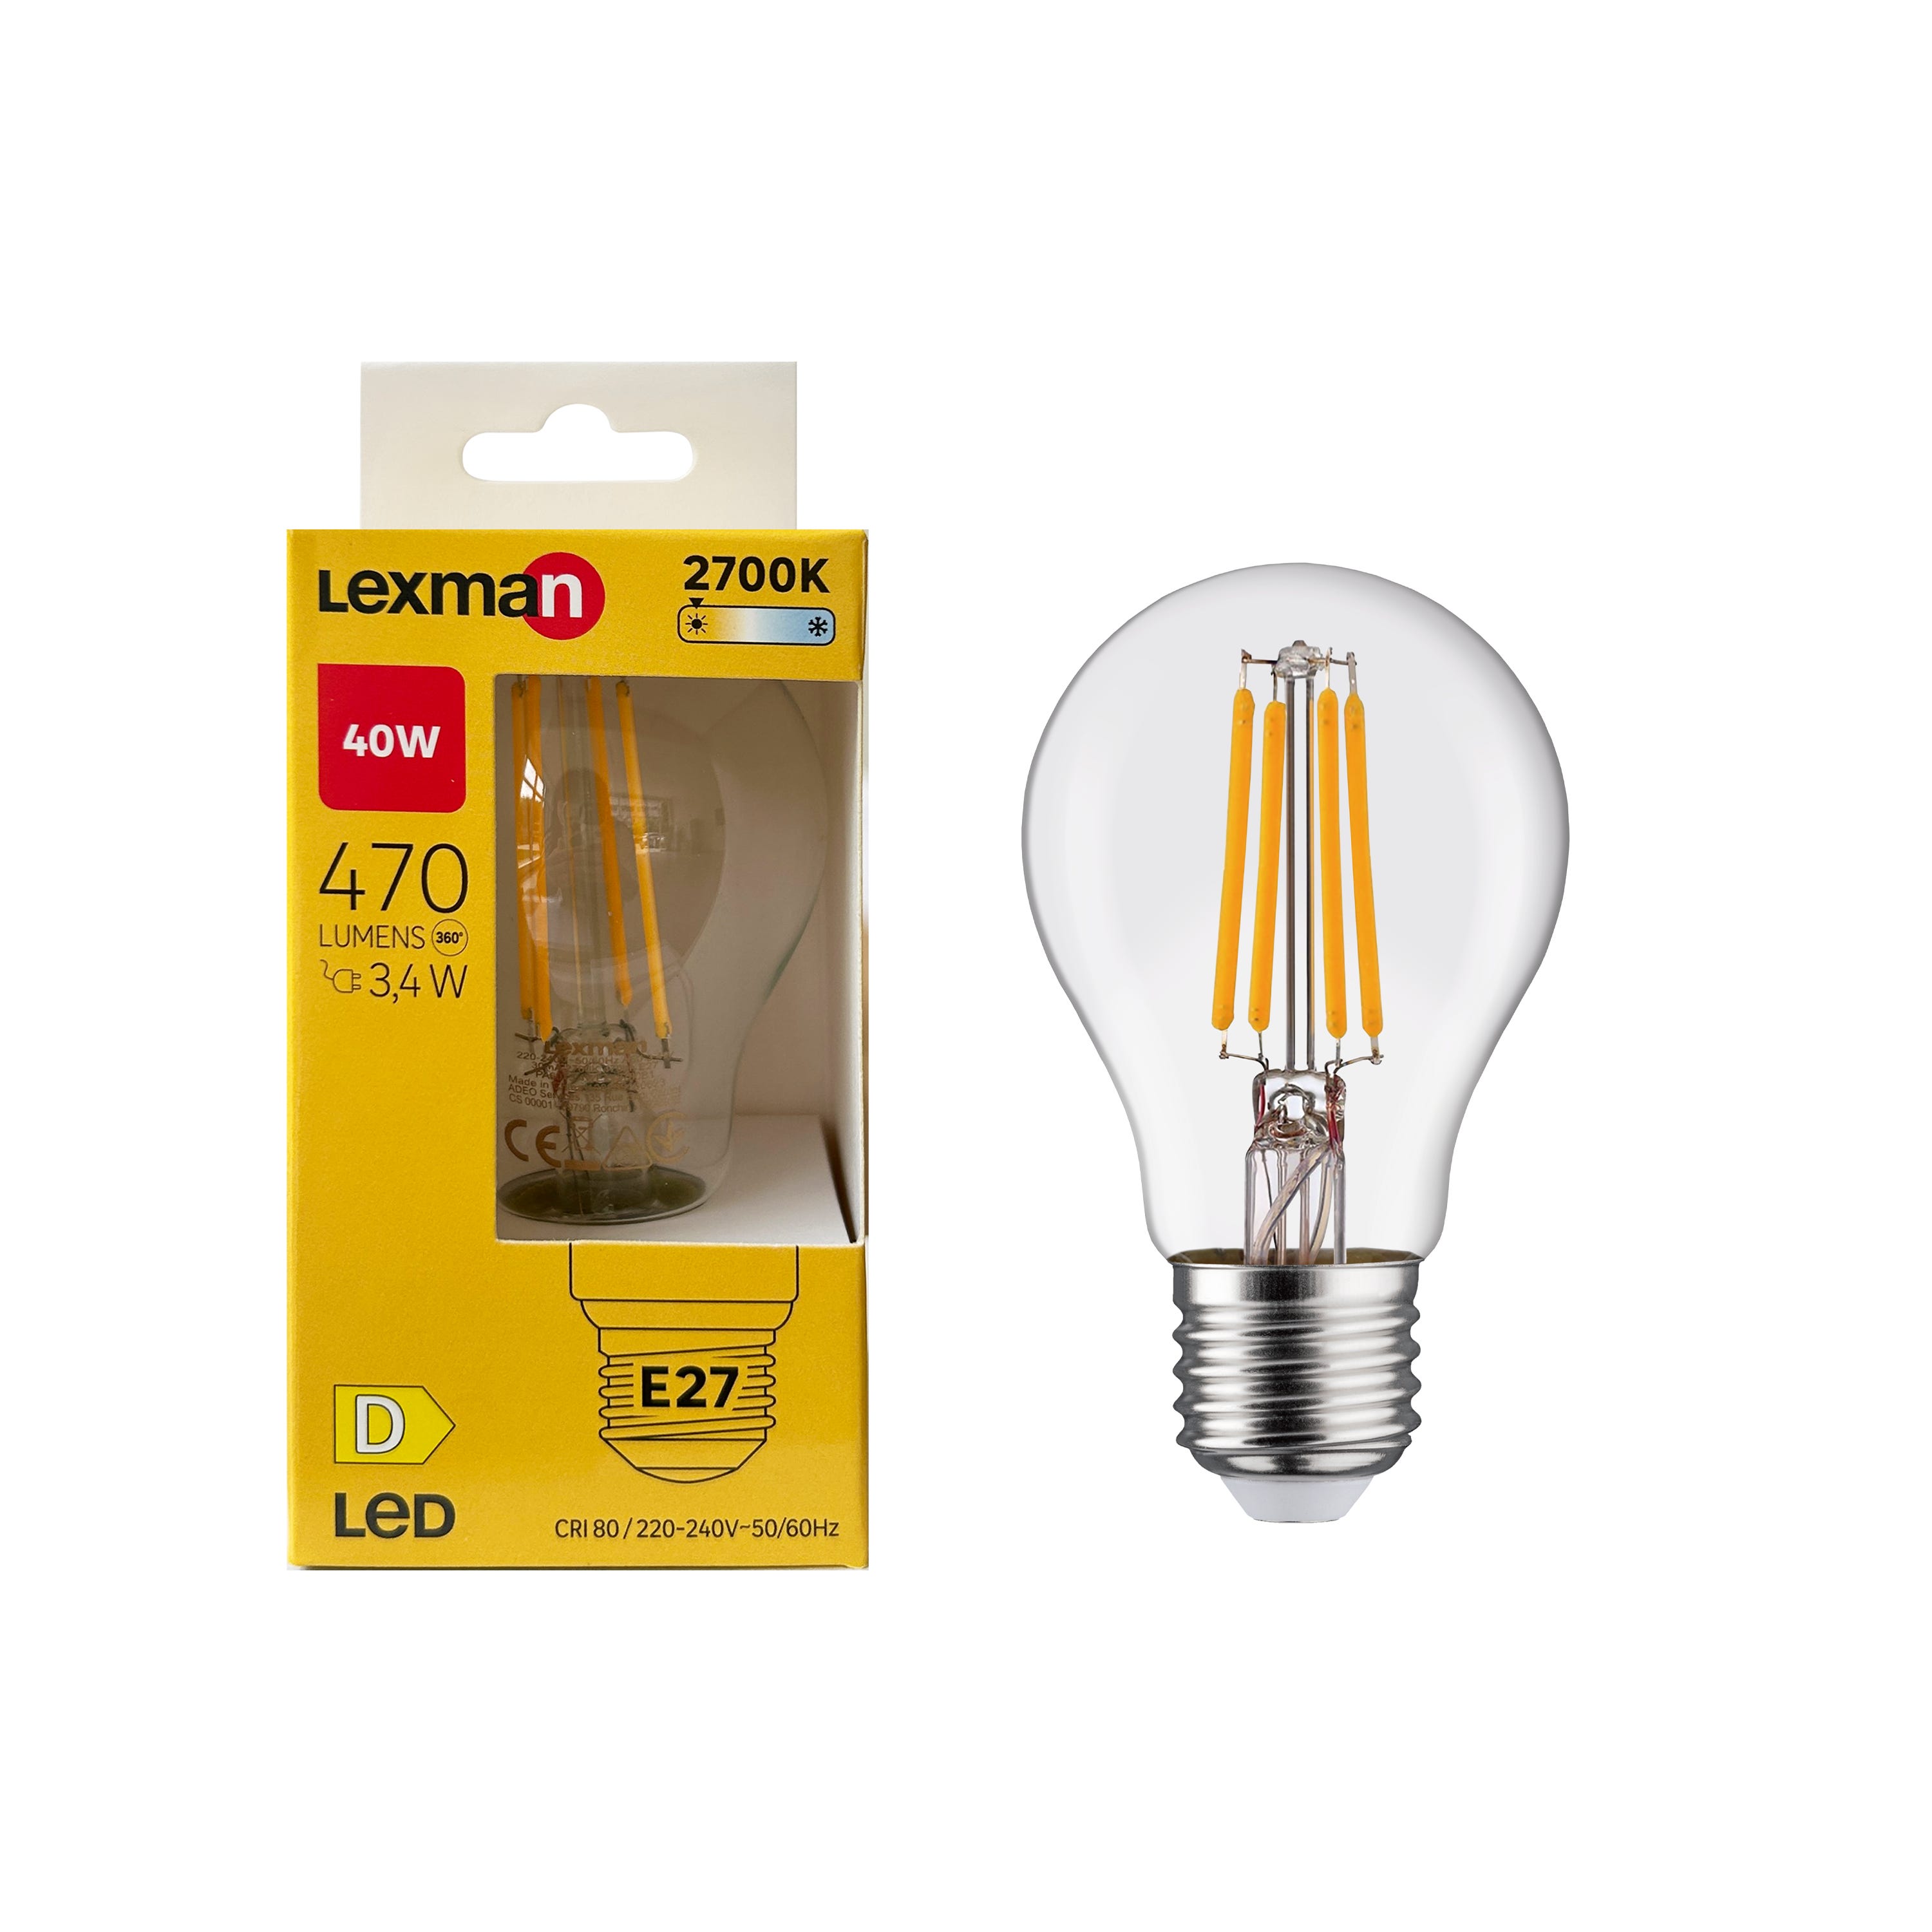 LnD I Ampoule led E27 470lm, 40W, Blanc chaud